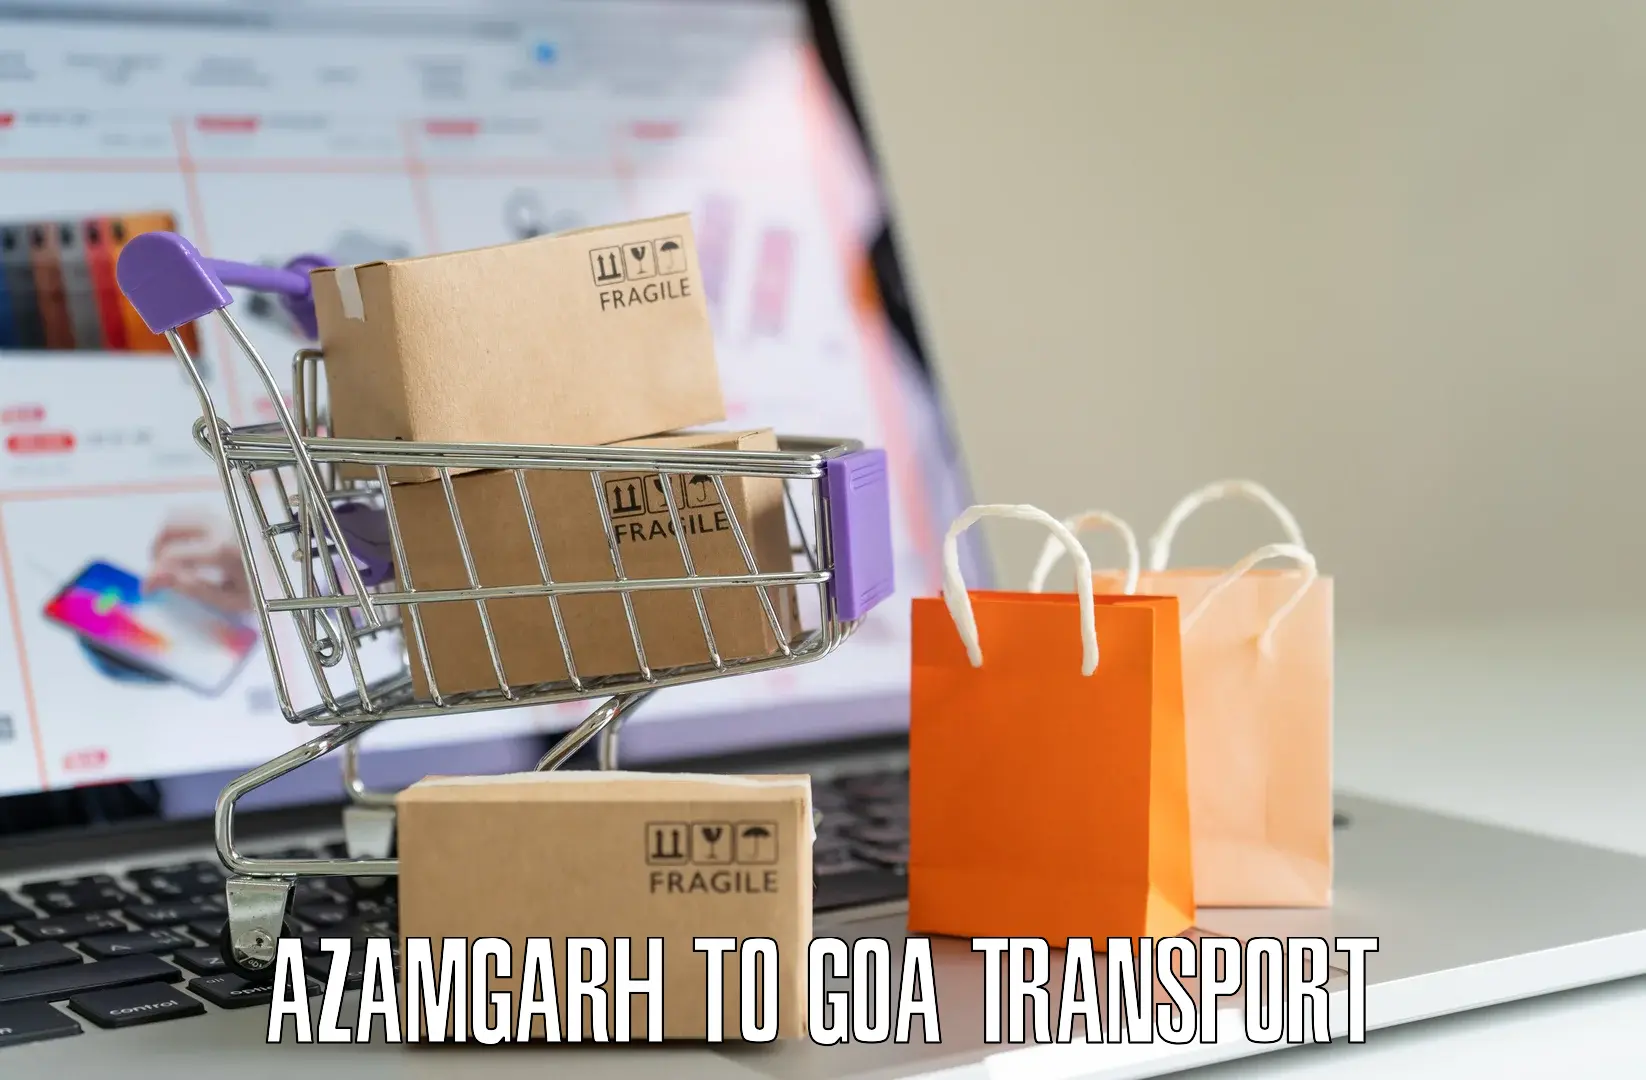 Sending bike to another city Azamgarh to Panjim